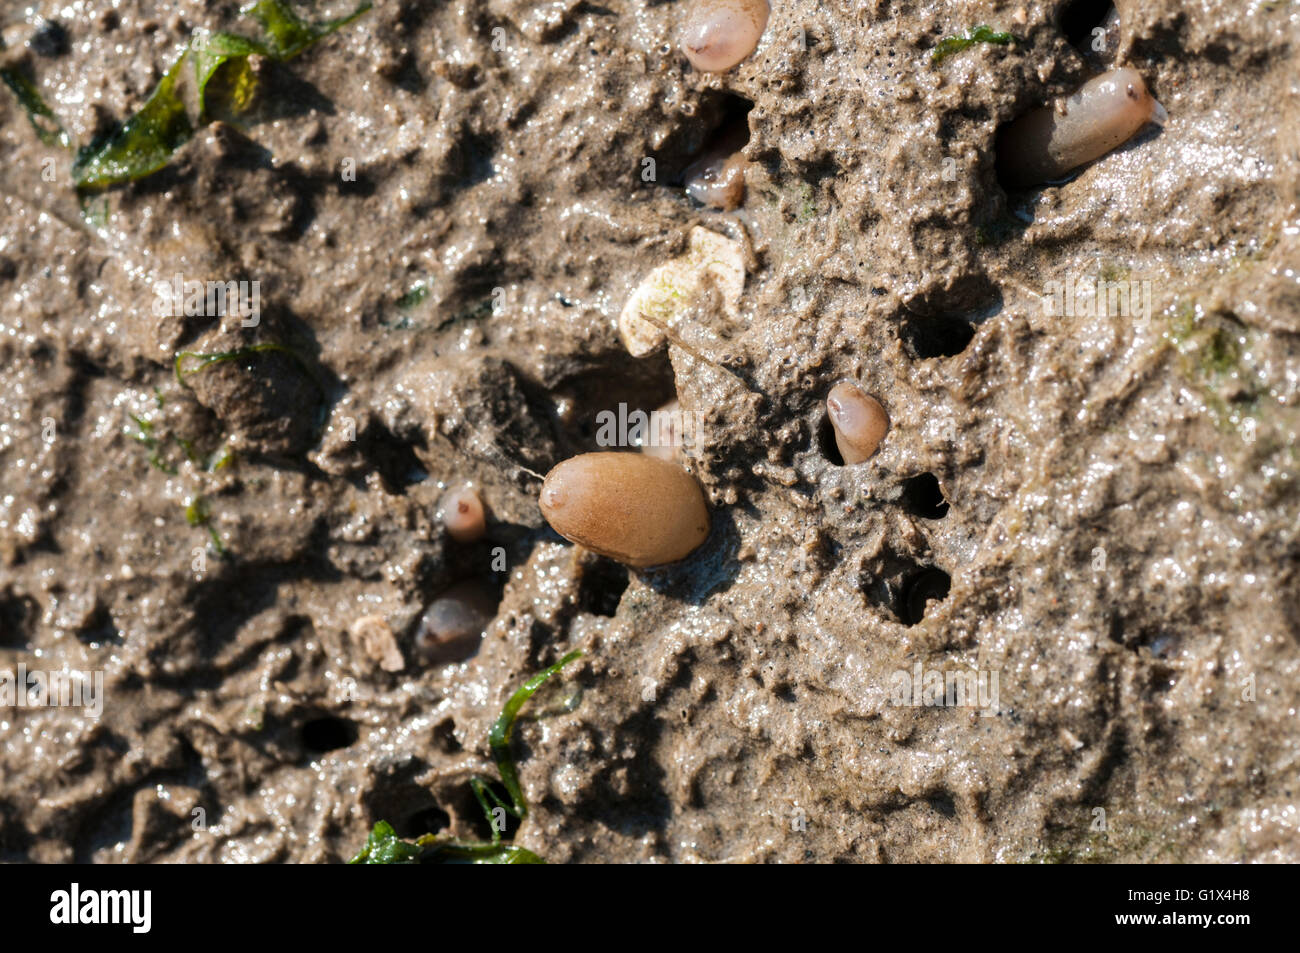 Found under a stone, some marine peanut worms Stock Photo